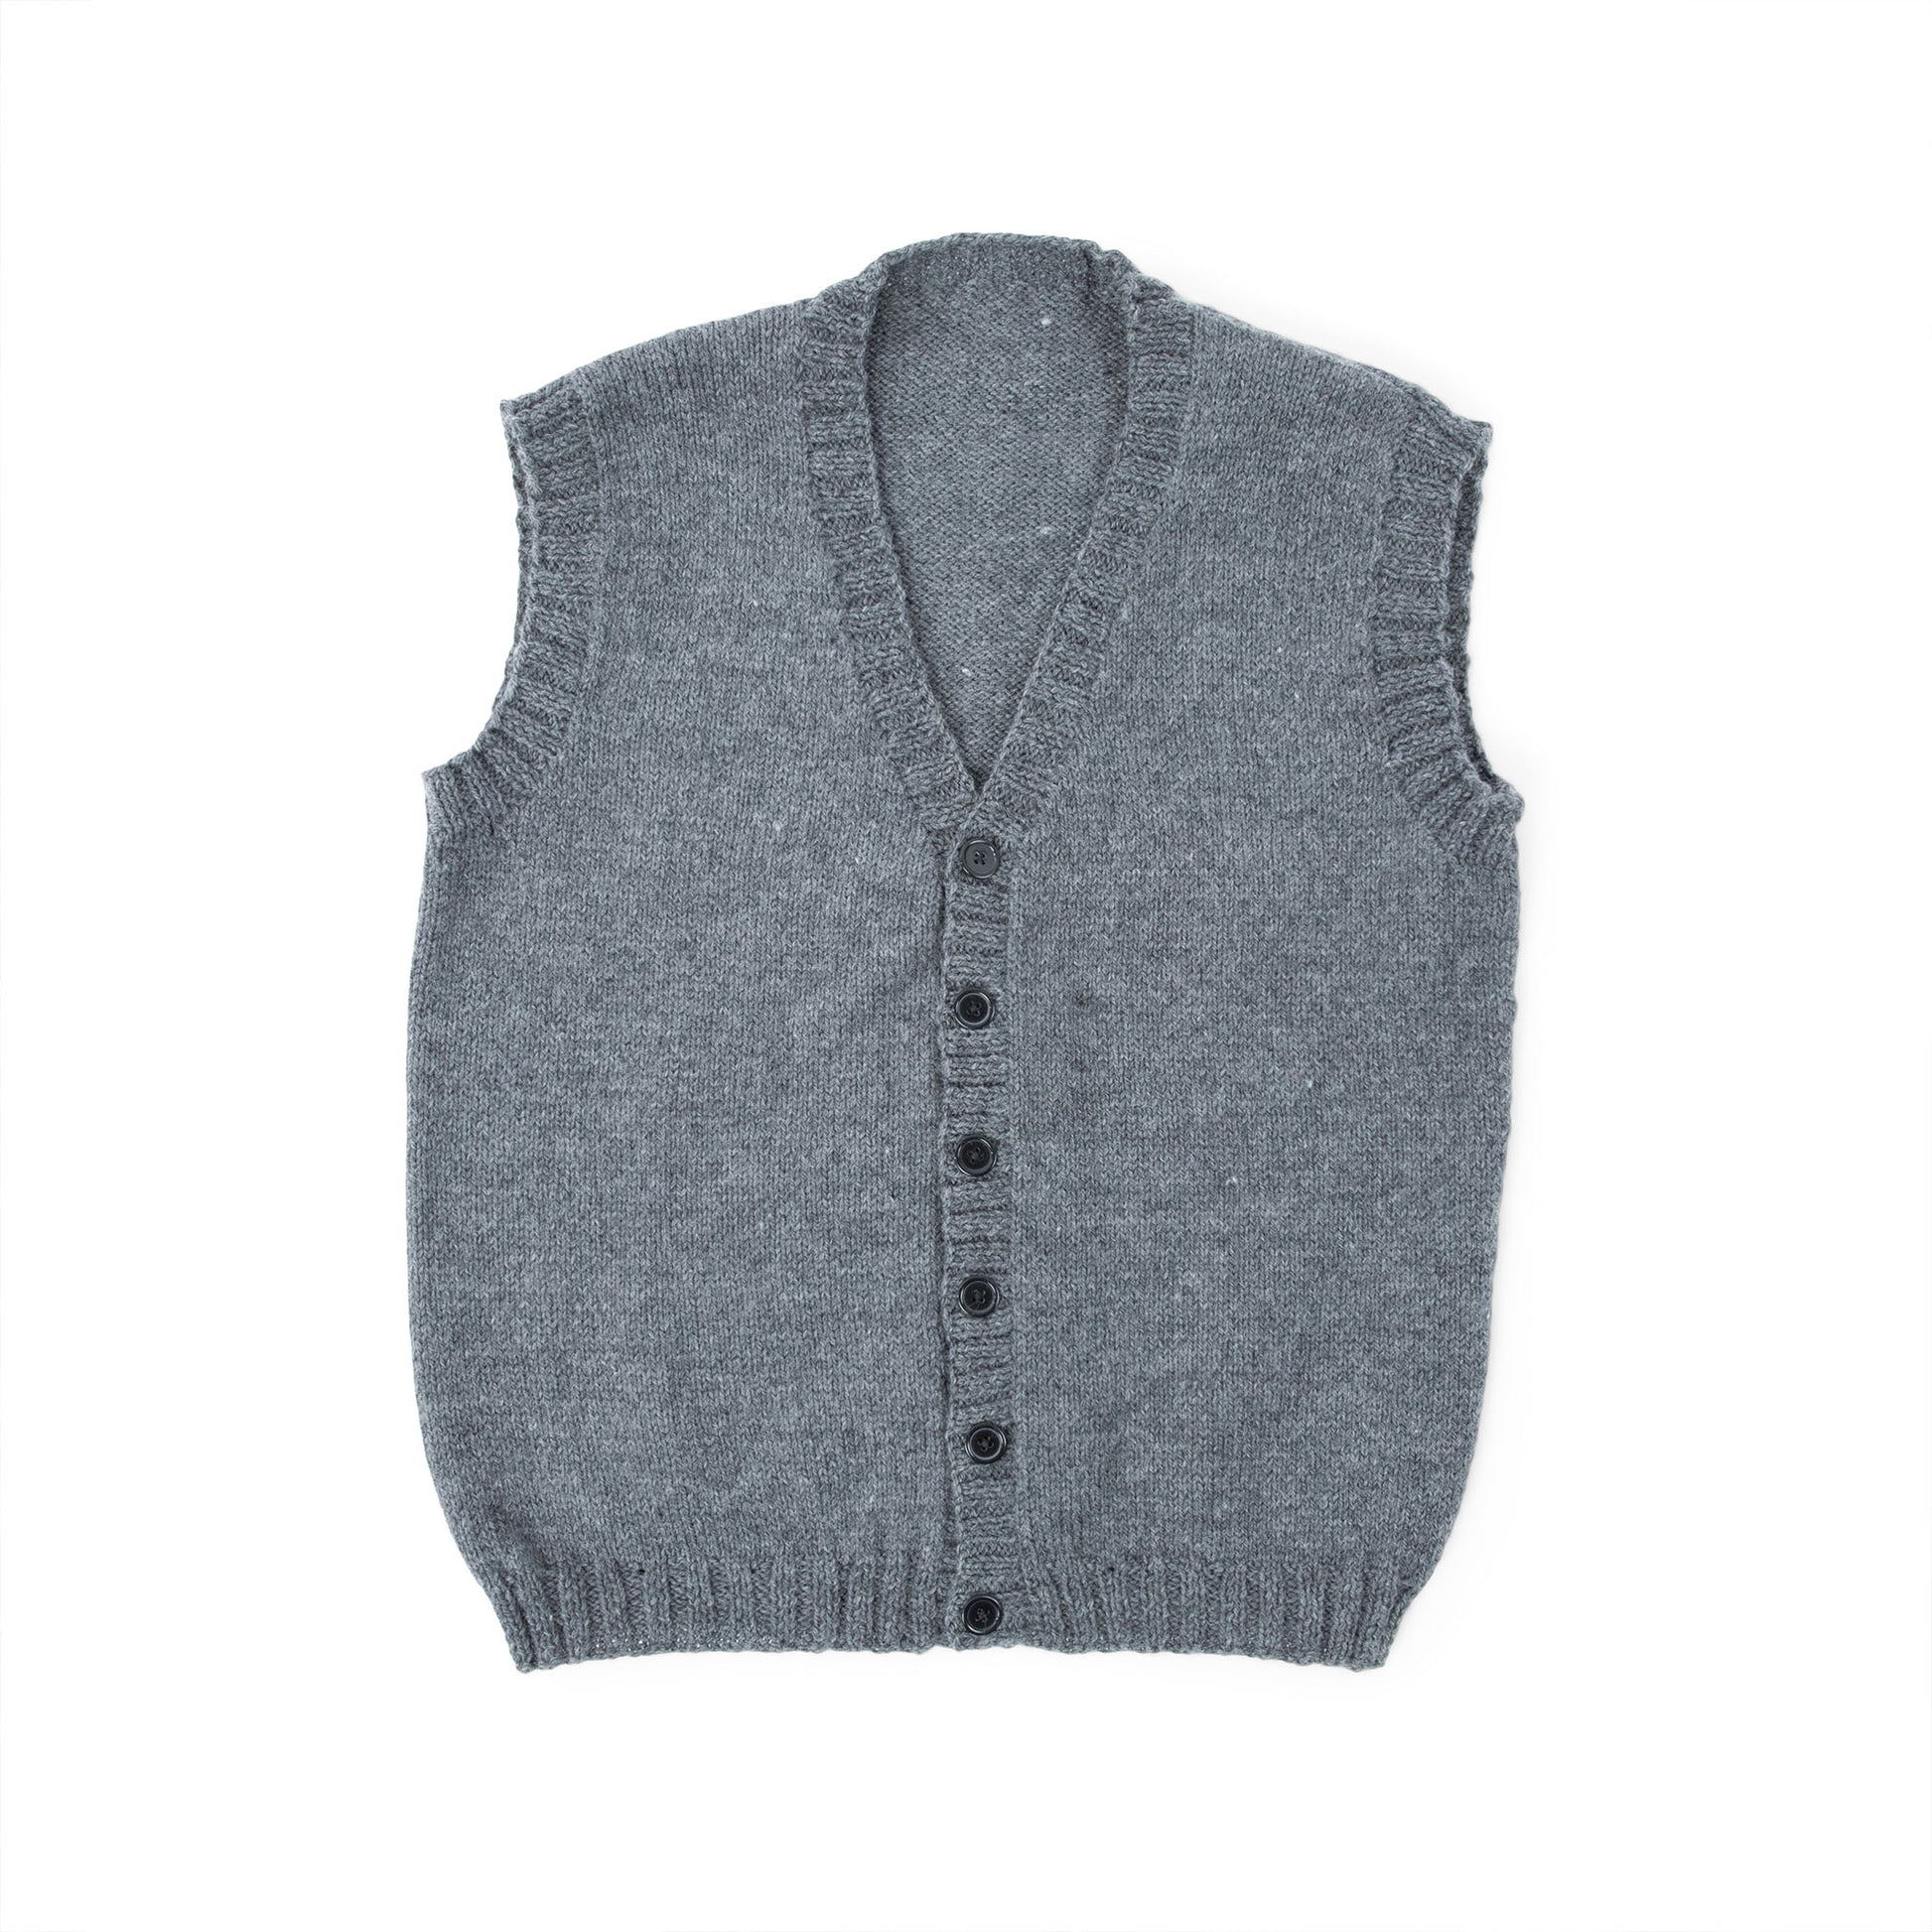 Free Patons Button Front Knit Vest Pattern